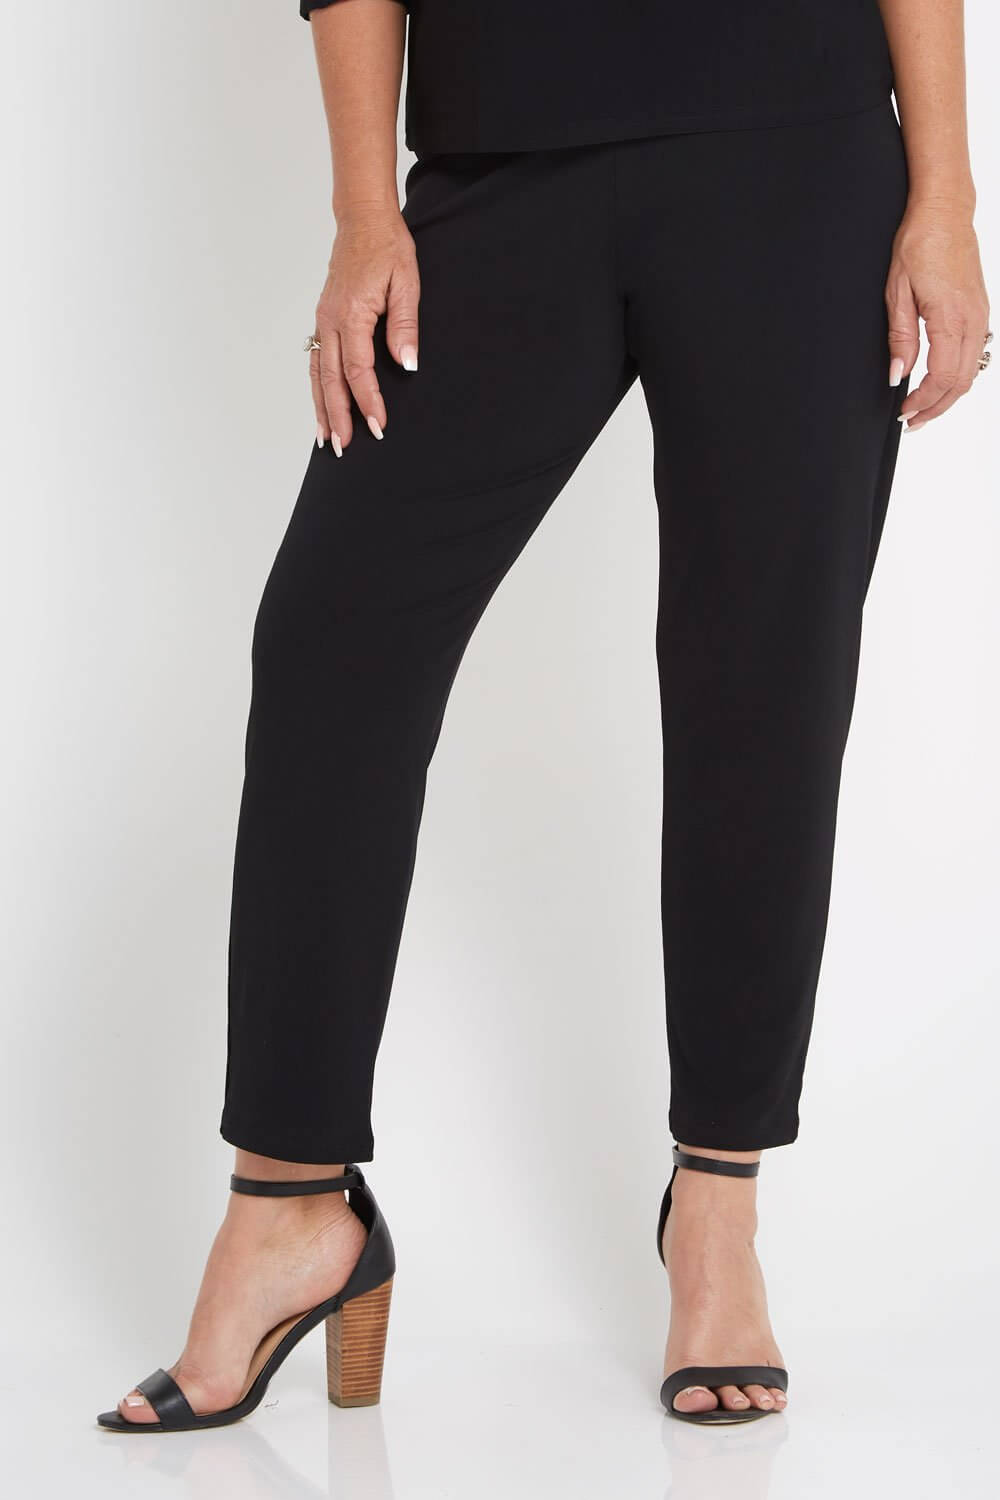 TULO Fashion | Gianna Petite Pants - Black | Australian Made – TULIO ...